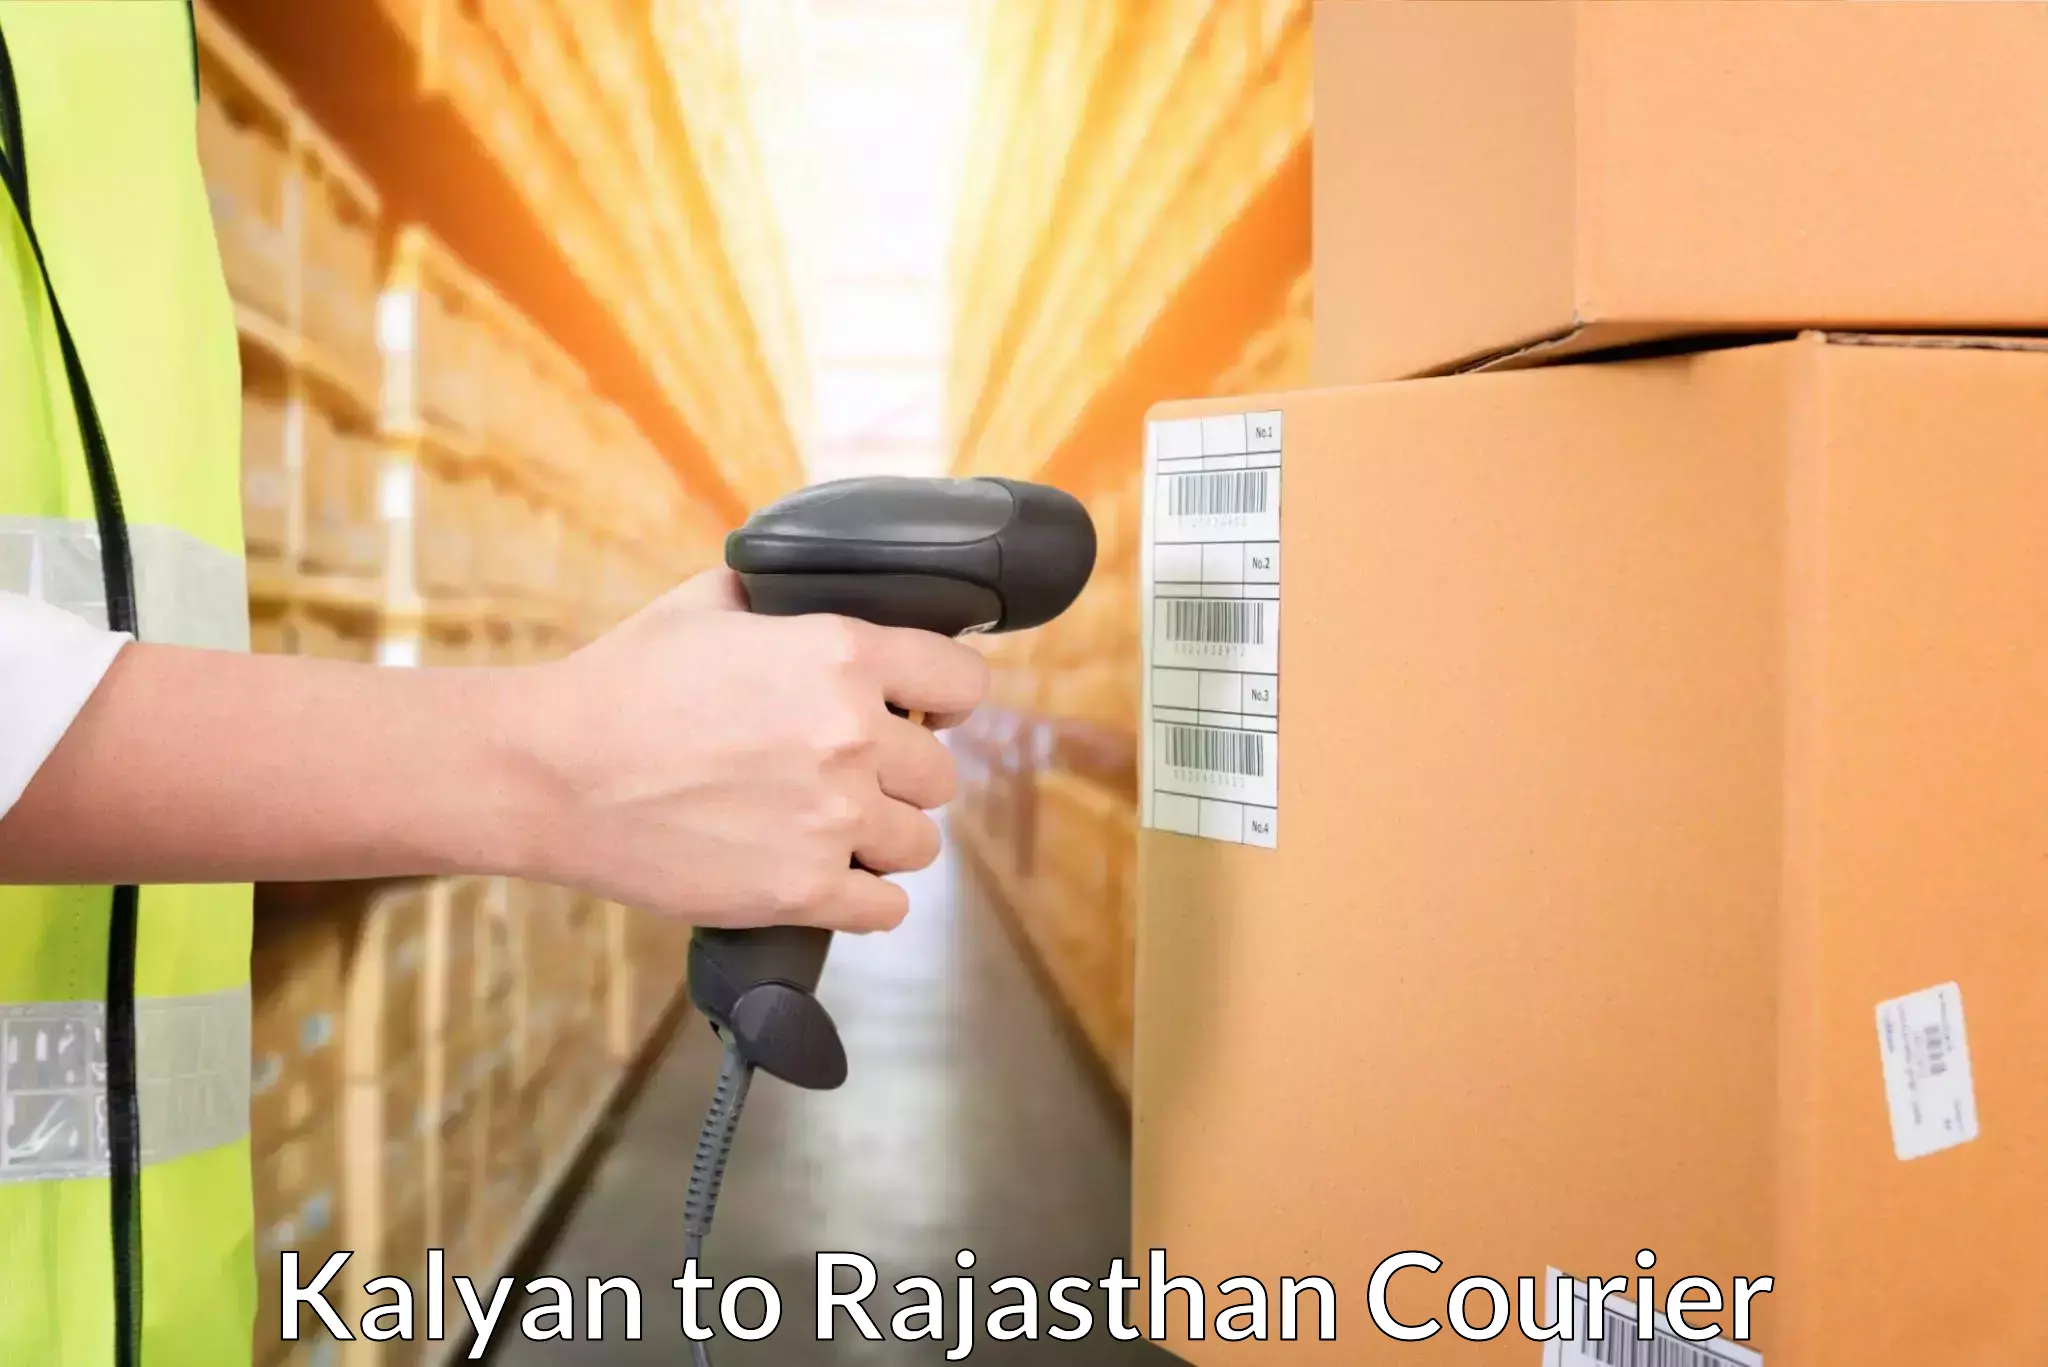 Supply chain delivery Kalyan to Jhunjhunu